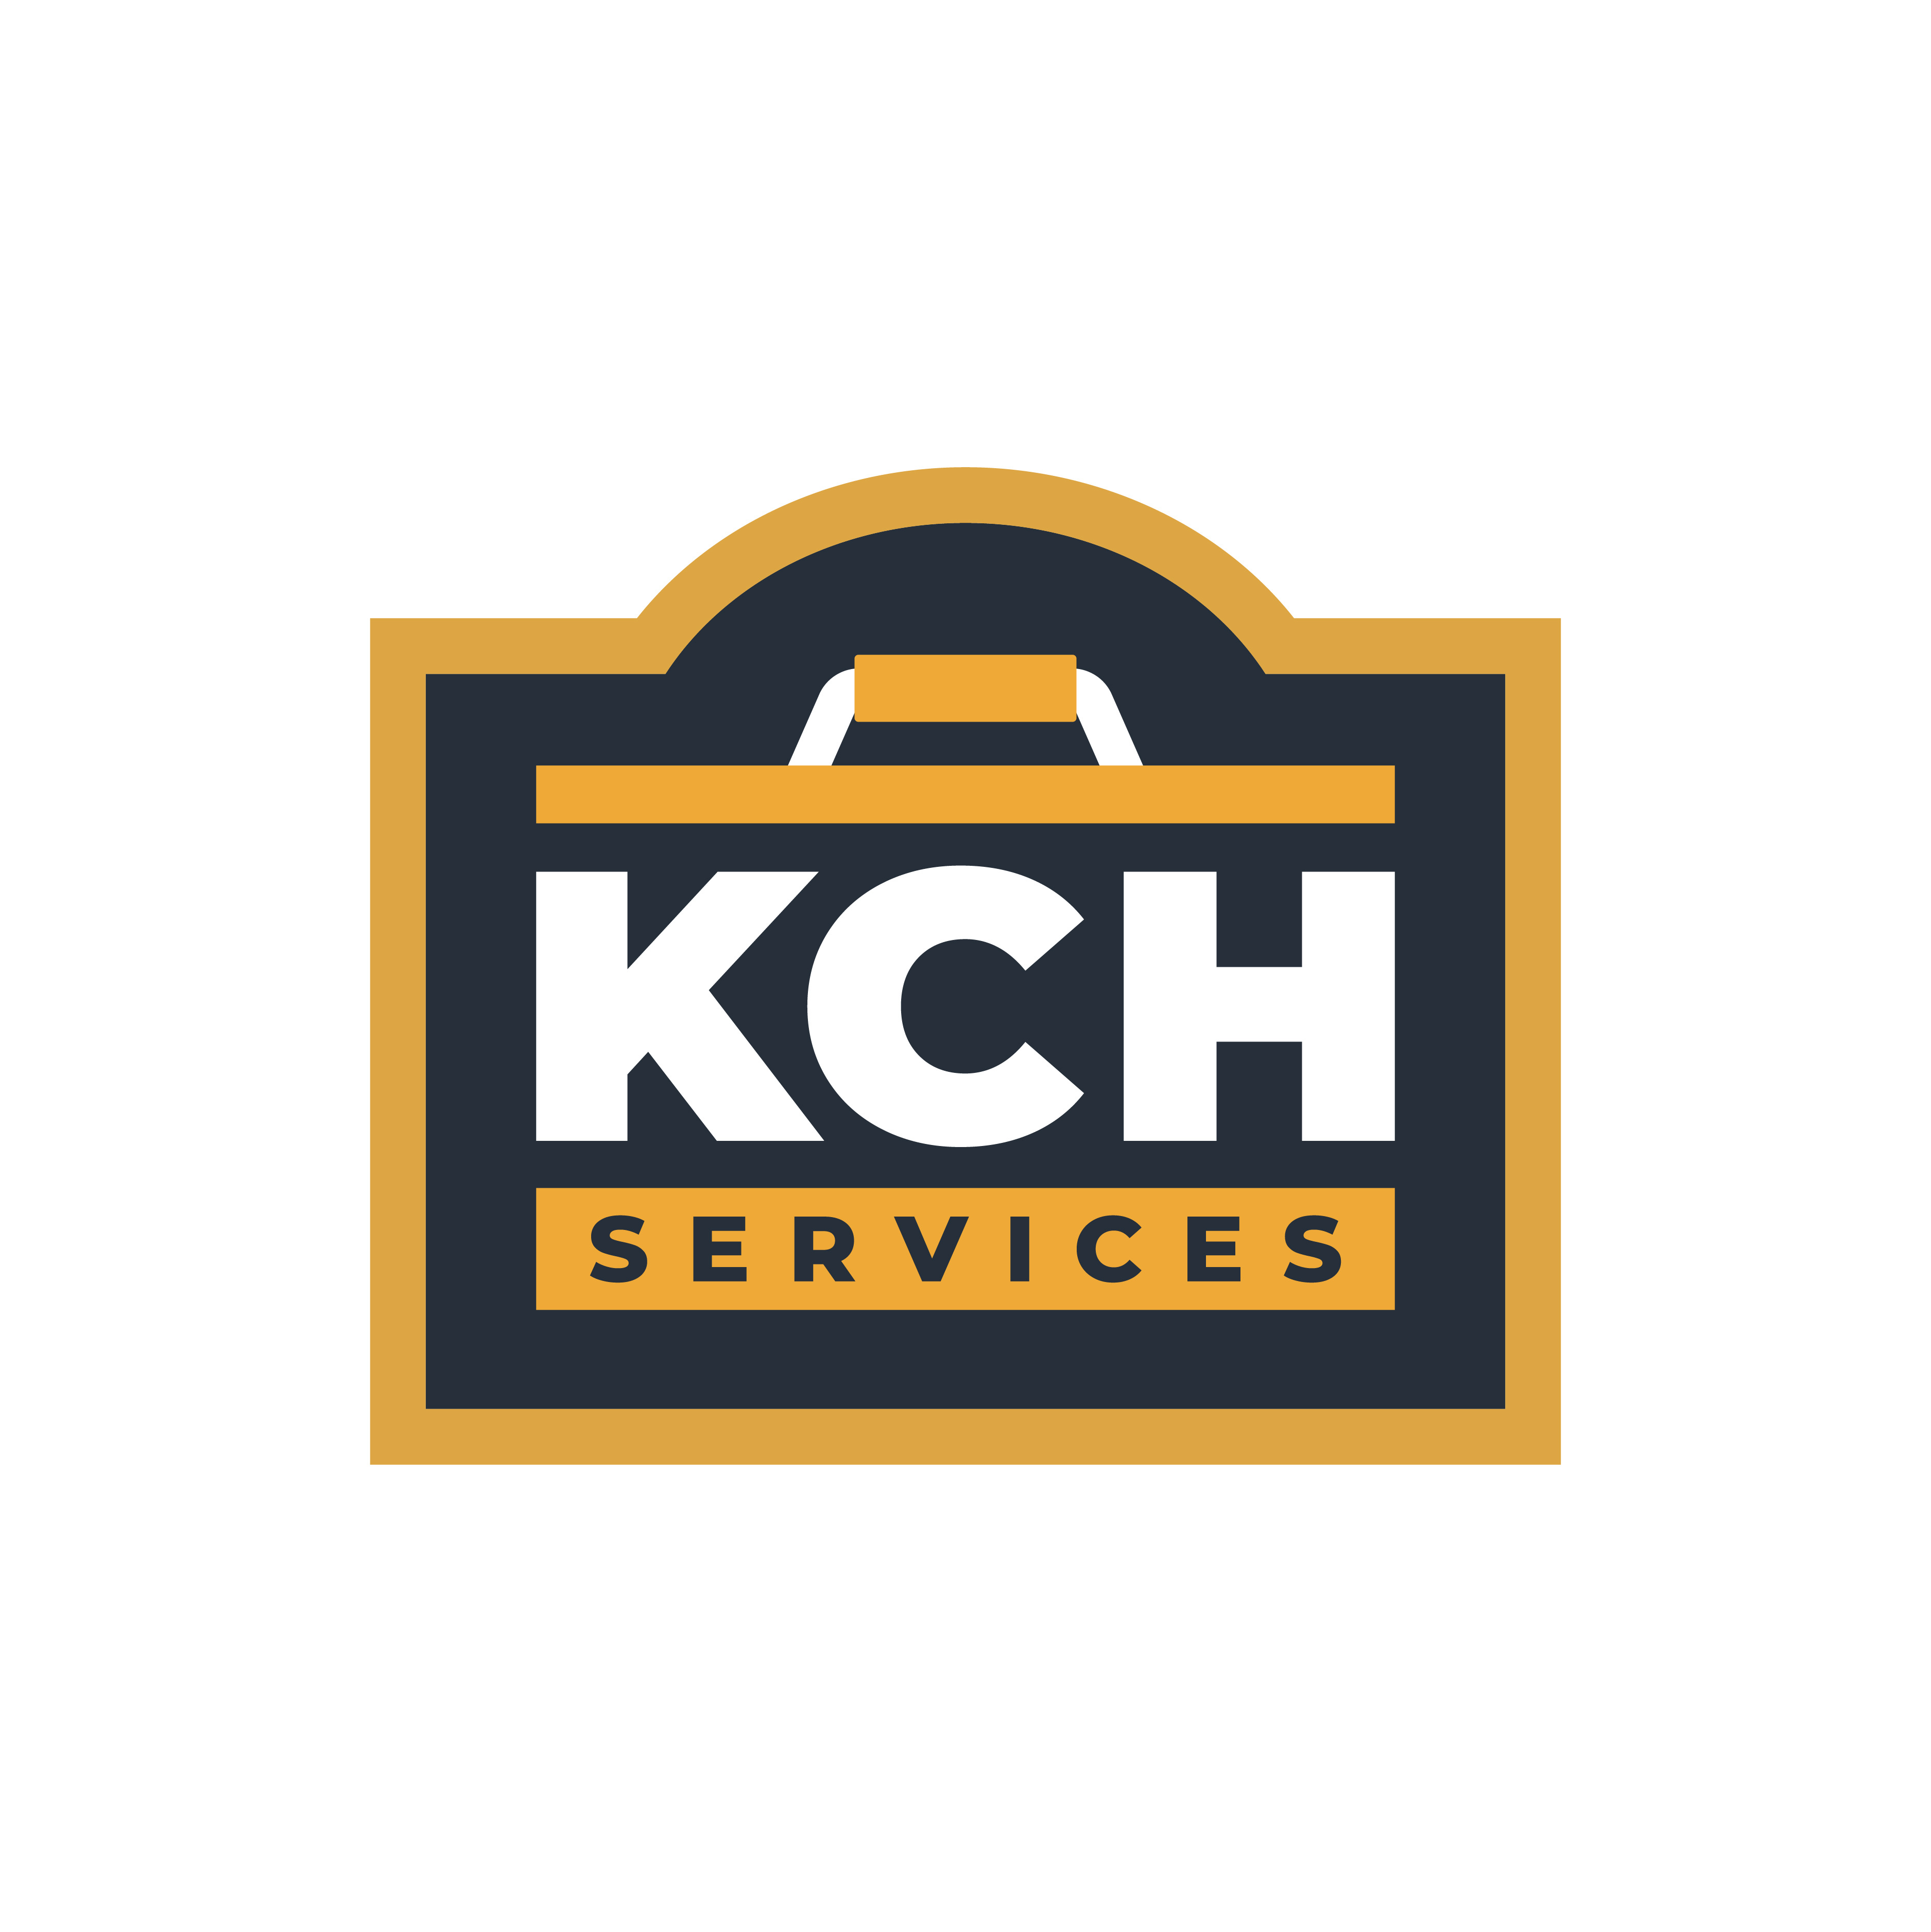 KCH Services logo design by logo designer Kyle Goens Design for your inspiration and for the worlds largest logo competition